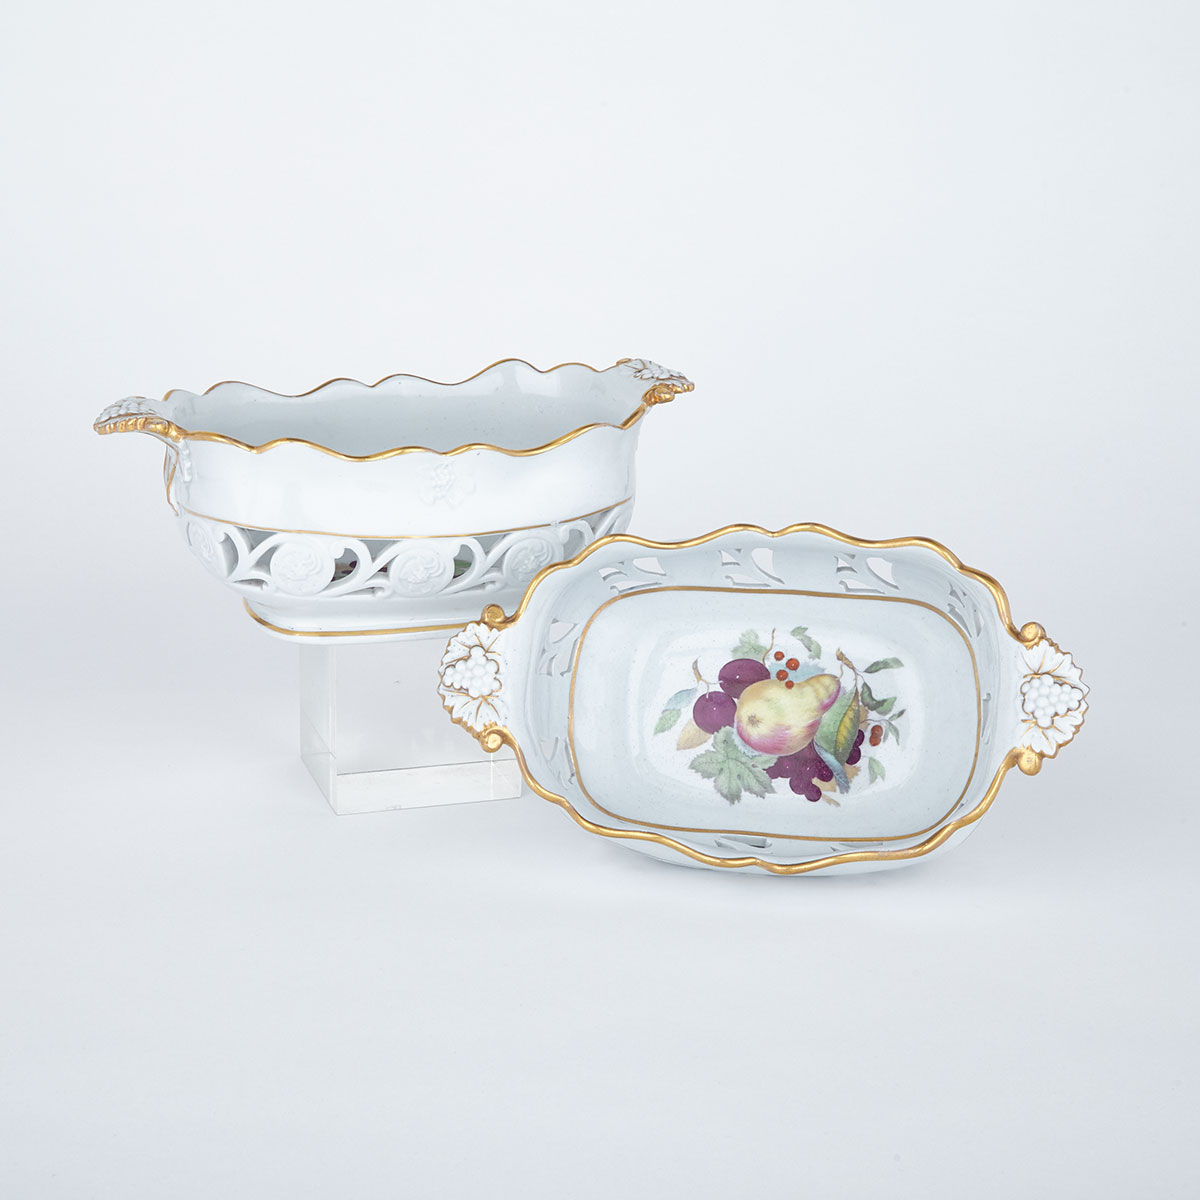 Pair of Ridgway Dessert Baskets, c.1815-20